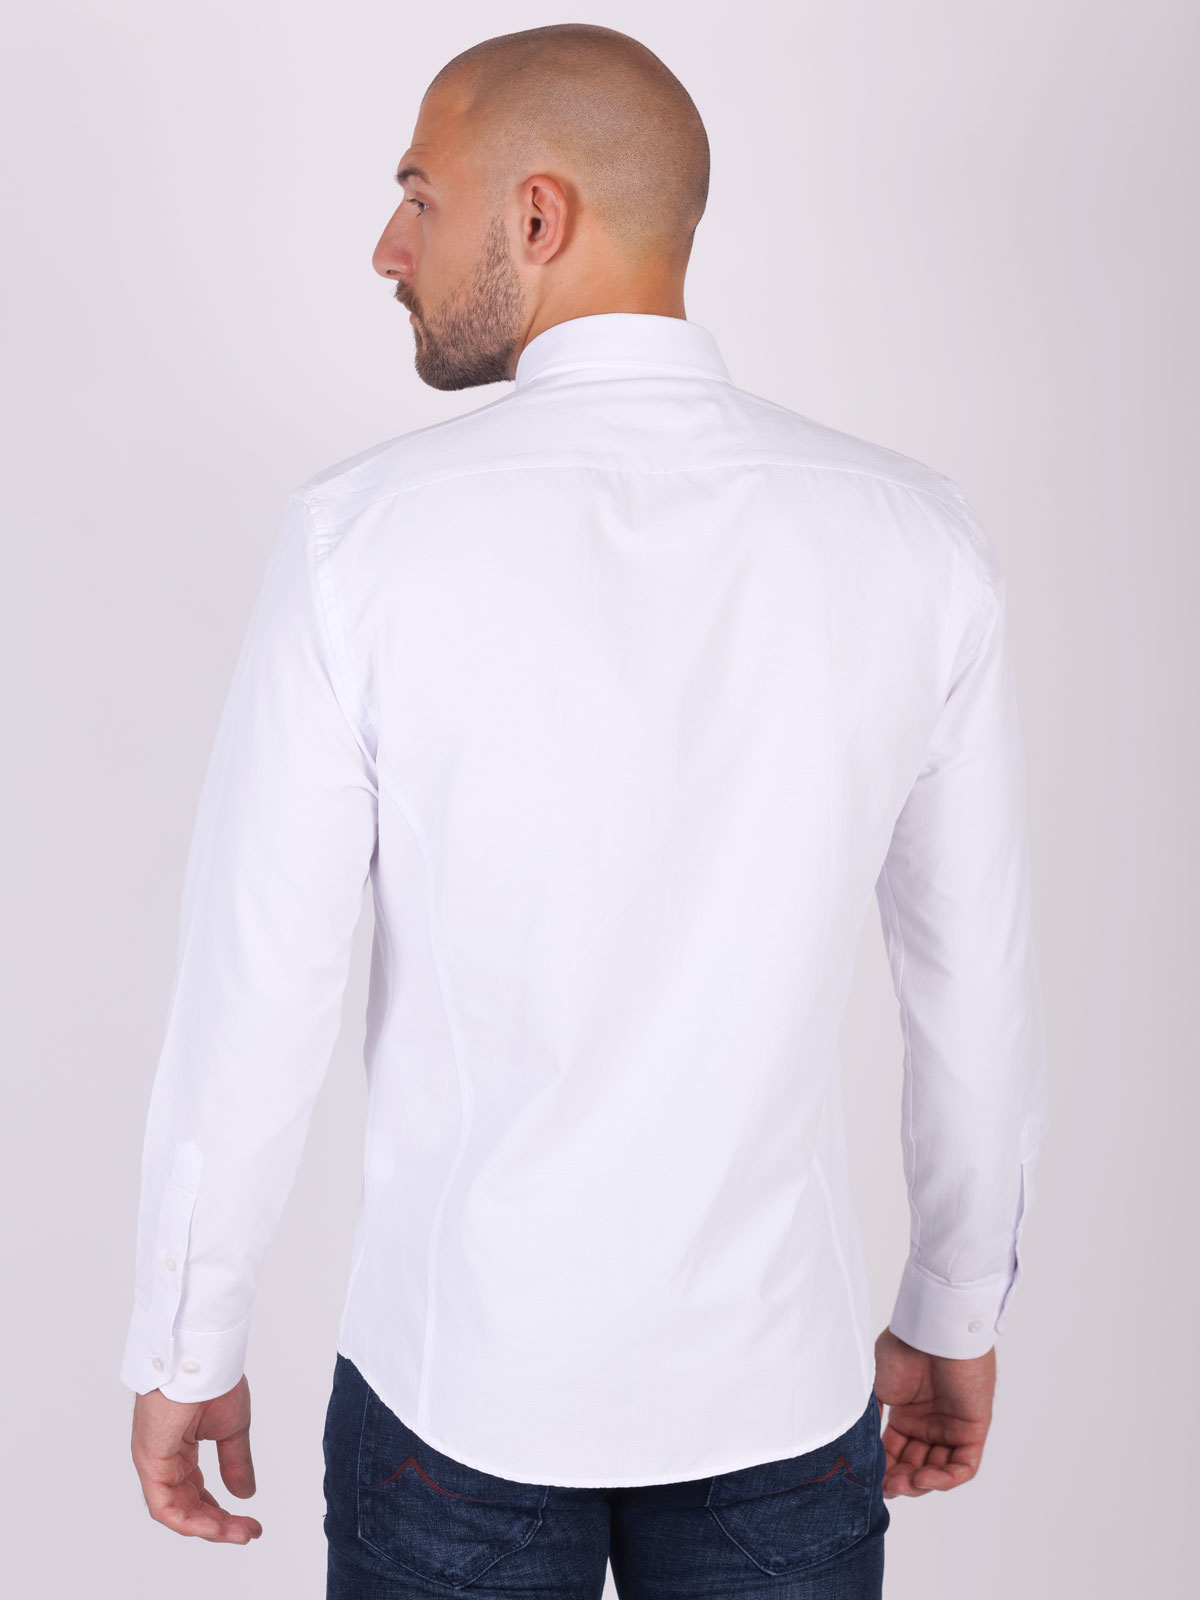 Elegant white shirt - 21404 € 48.37 img2